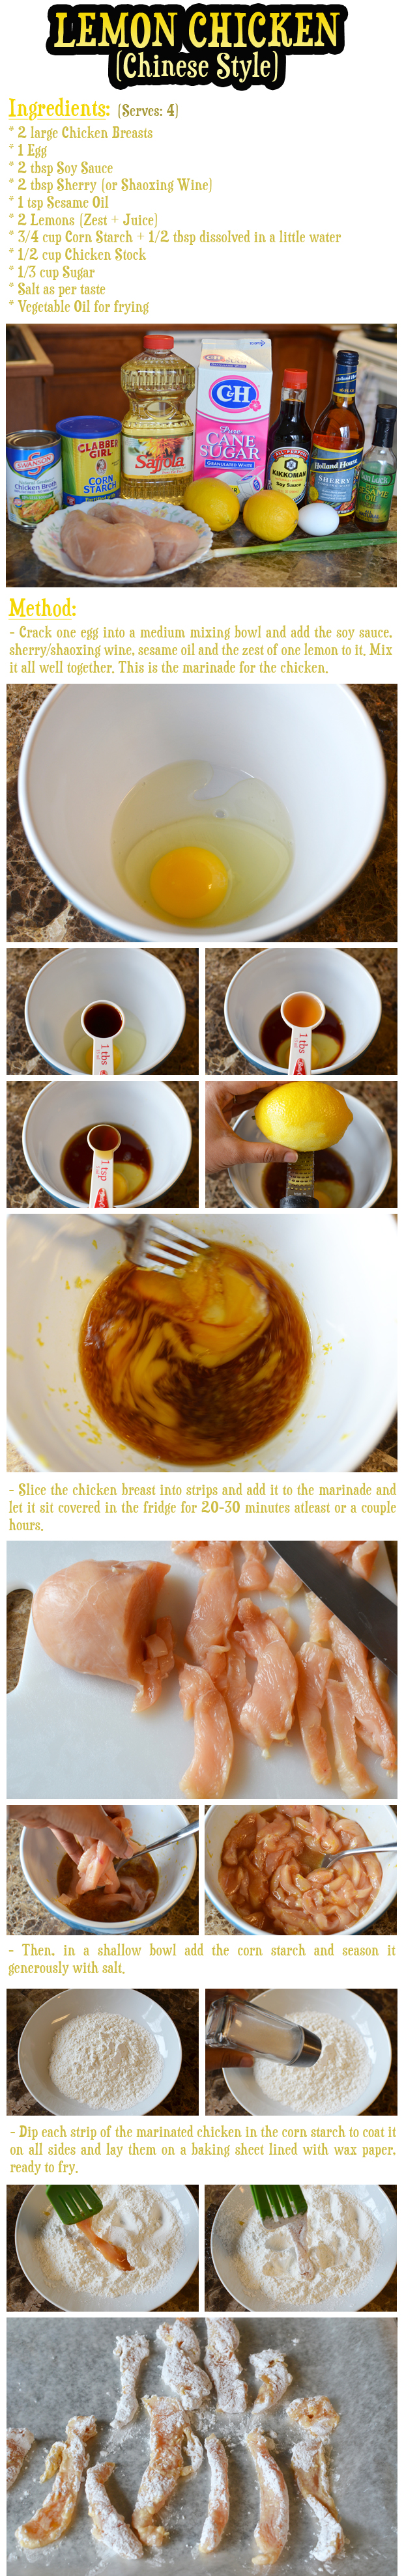 Lemon Chicken (Chinese Style) Recipe Part-1